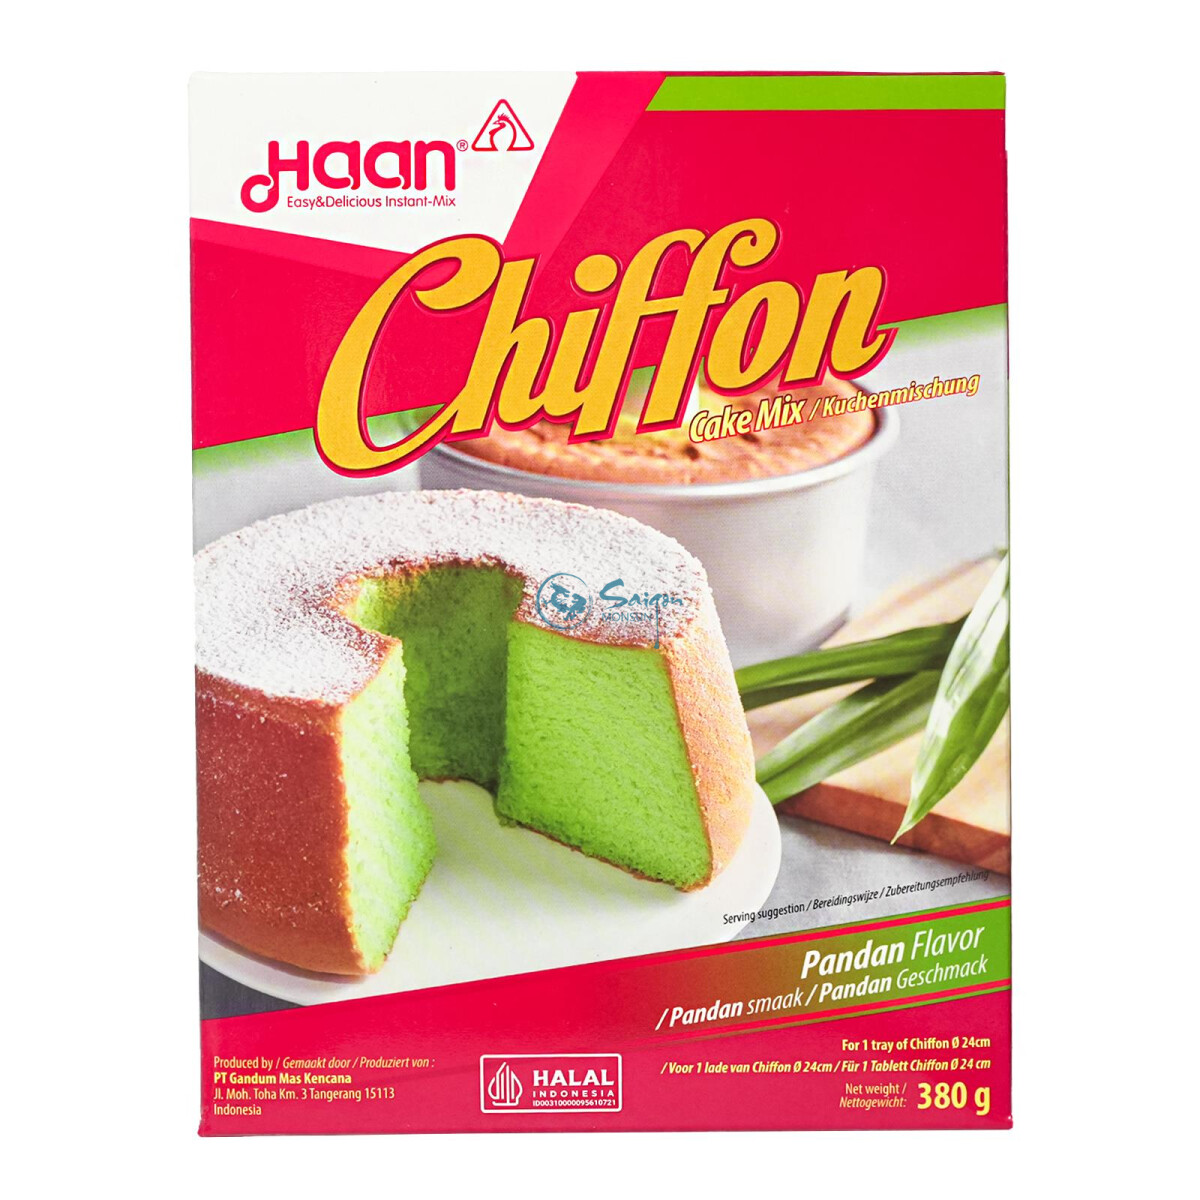 Haan Chiffon Cake Mix Pandan Flavor 380g